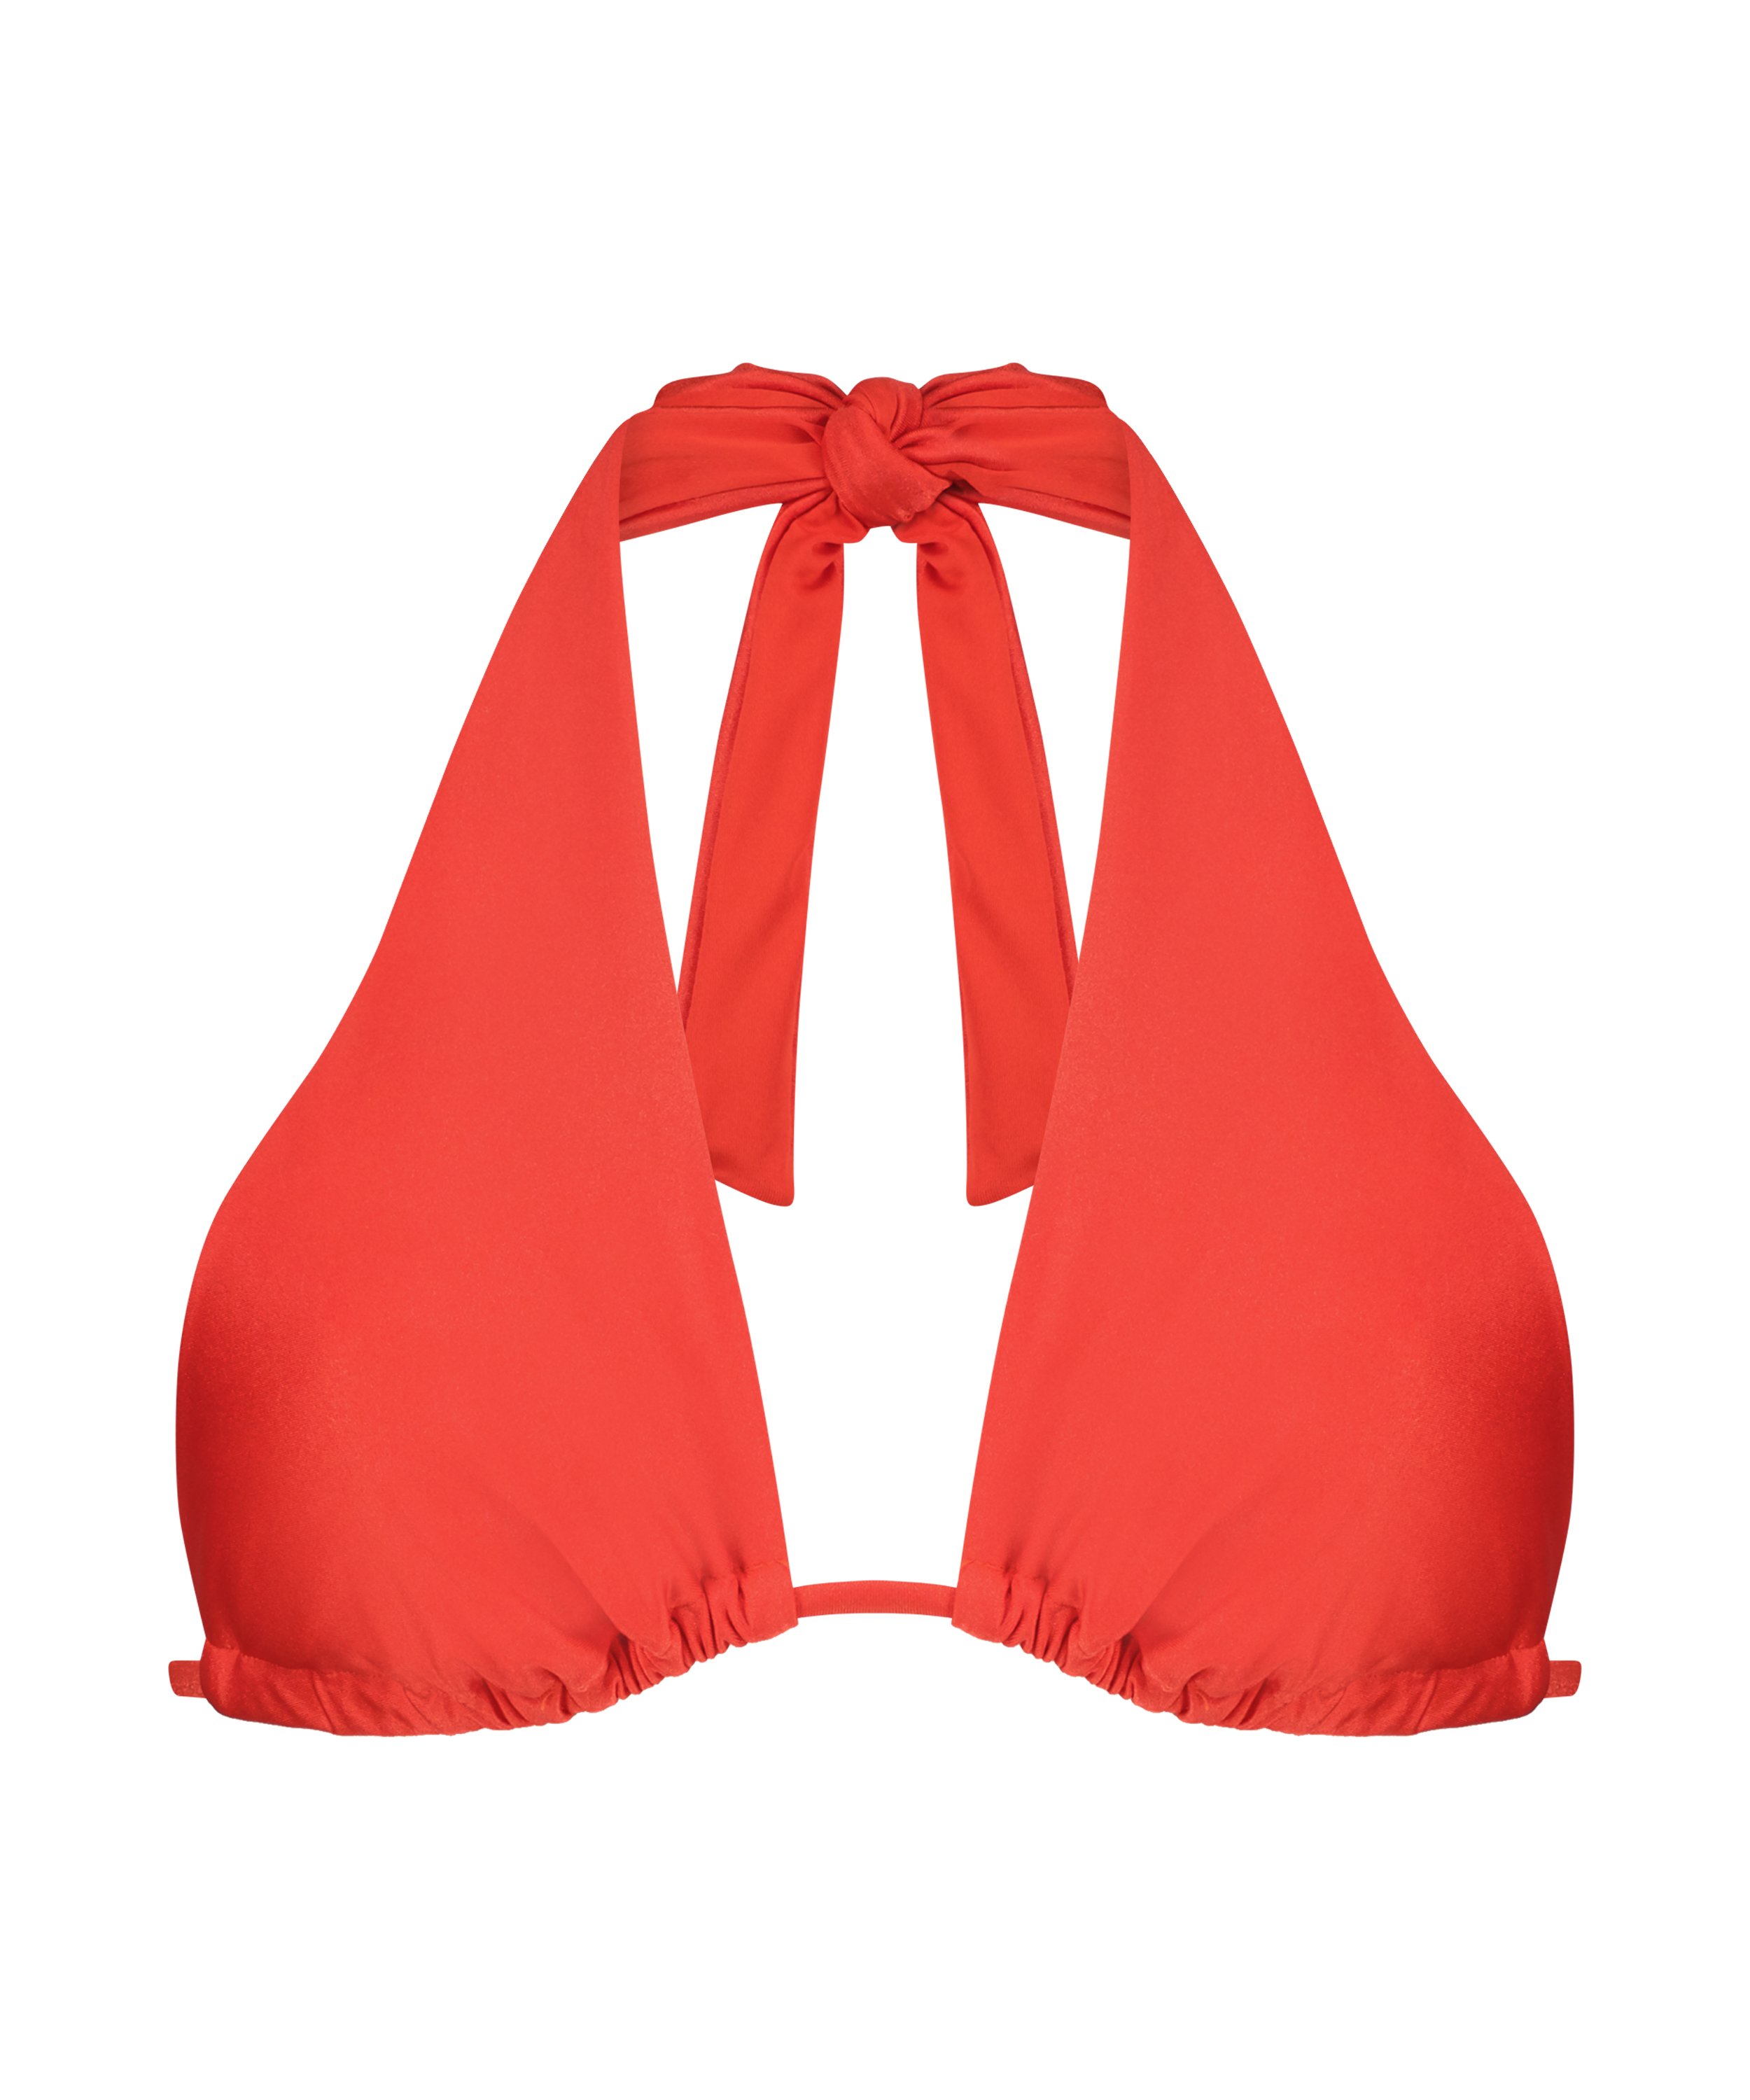 BoraBora Triangle Multi-way Bikini, Red, main